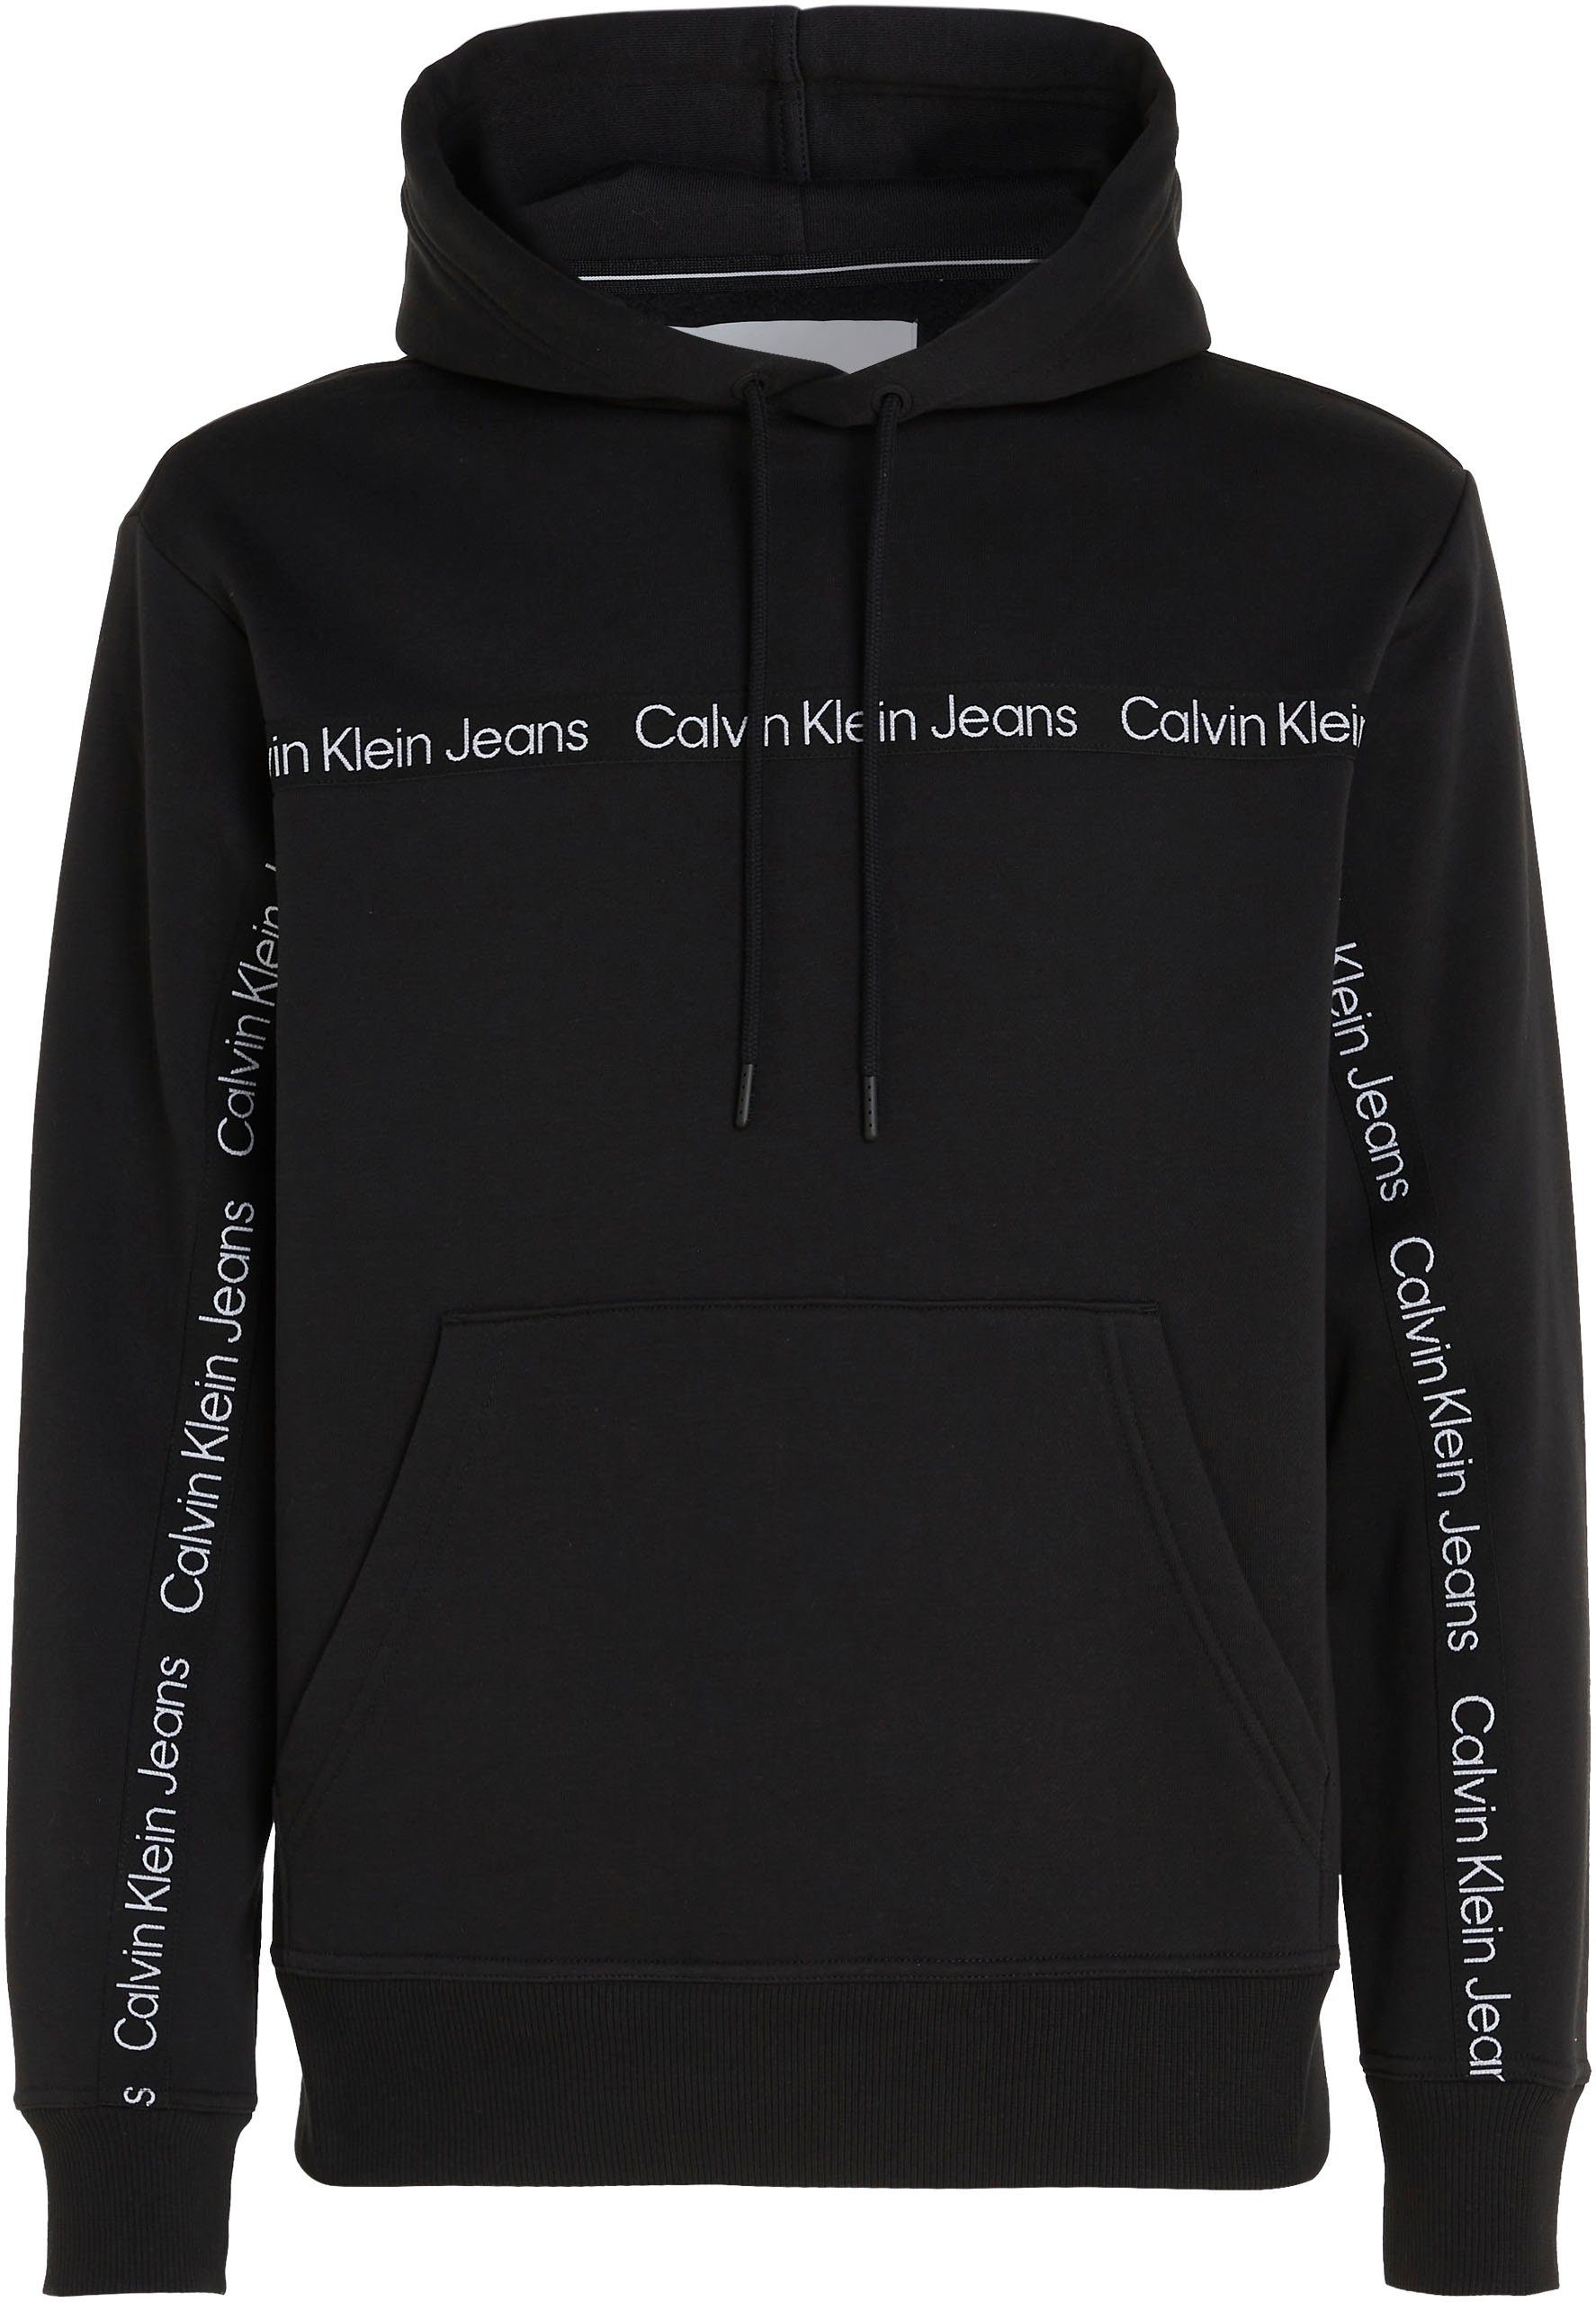 Kapuzensweatshirt mit Jeans Klein Calvin Klein Jeans Calvin Logodesign